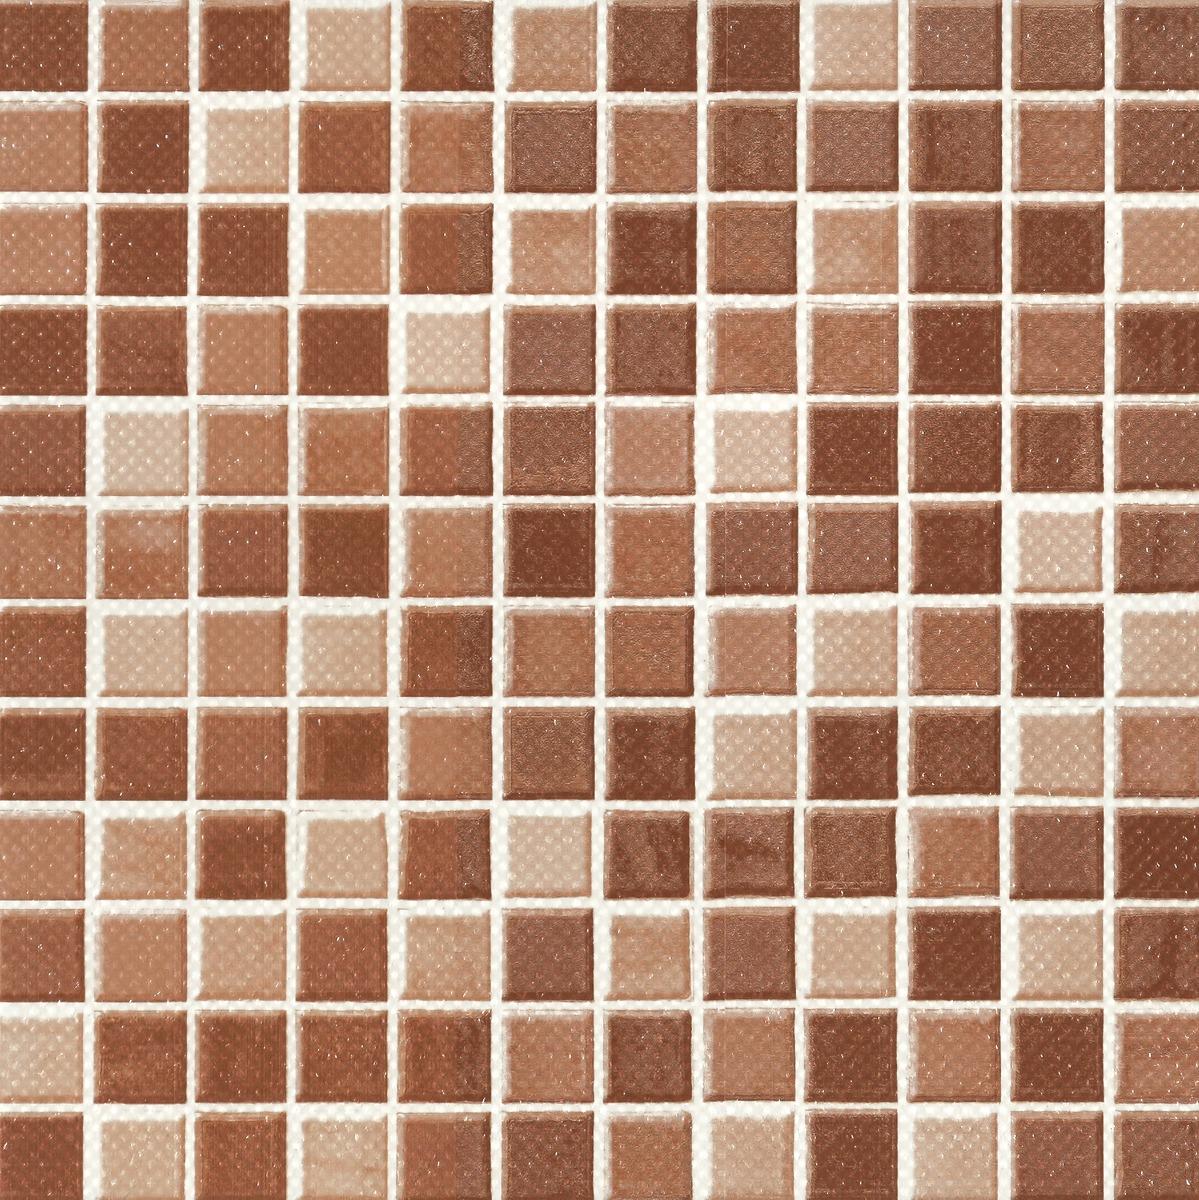 All Tiles for Bathroom Tiles, Balcony Tiles, Hospital Tiles, Bar/Restaurant, Commercial/Office, Outdoor/Terrace